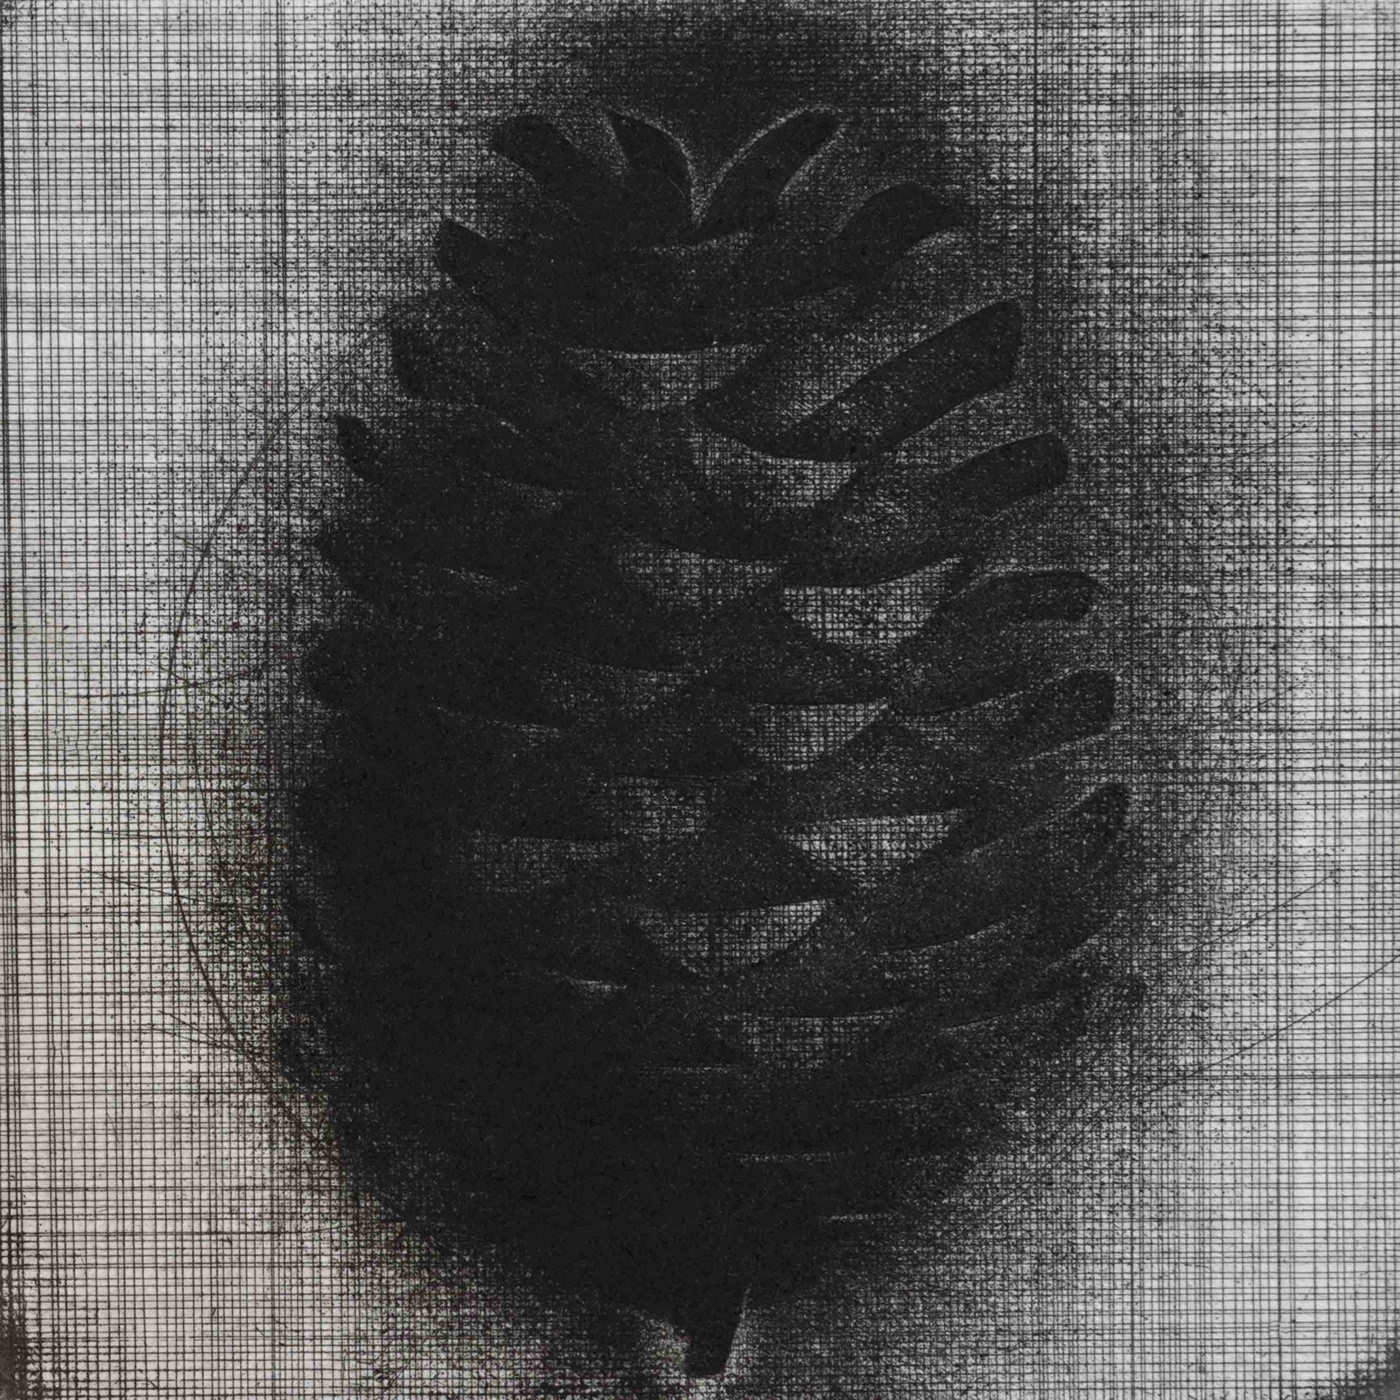 emblem etching pine cone